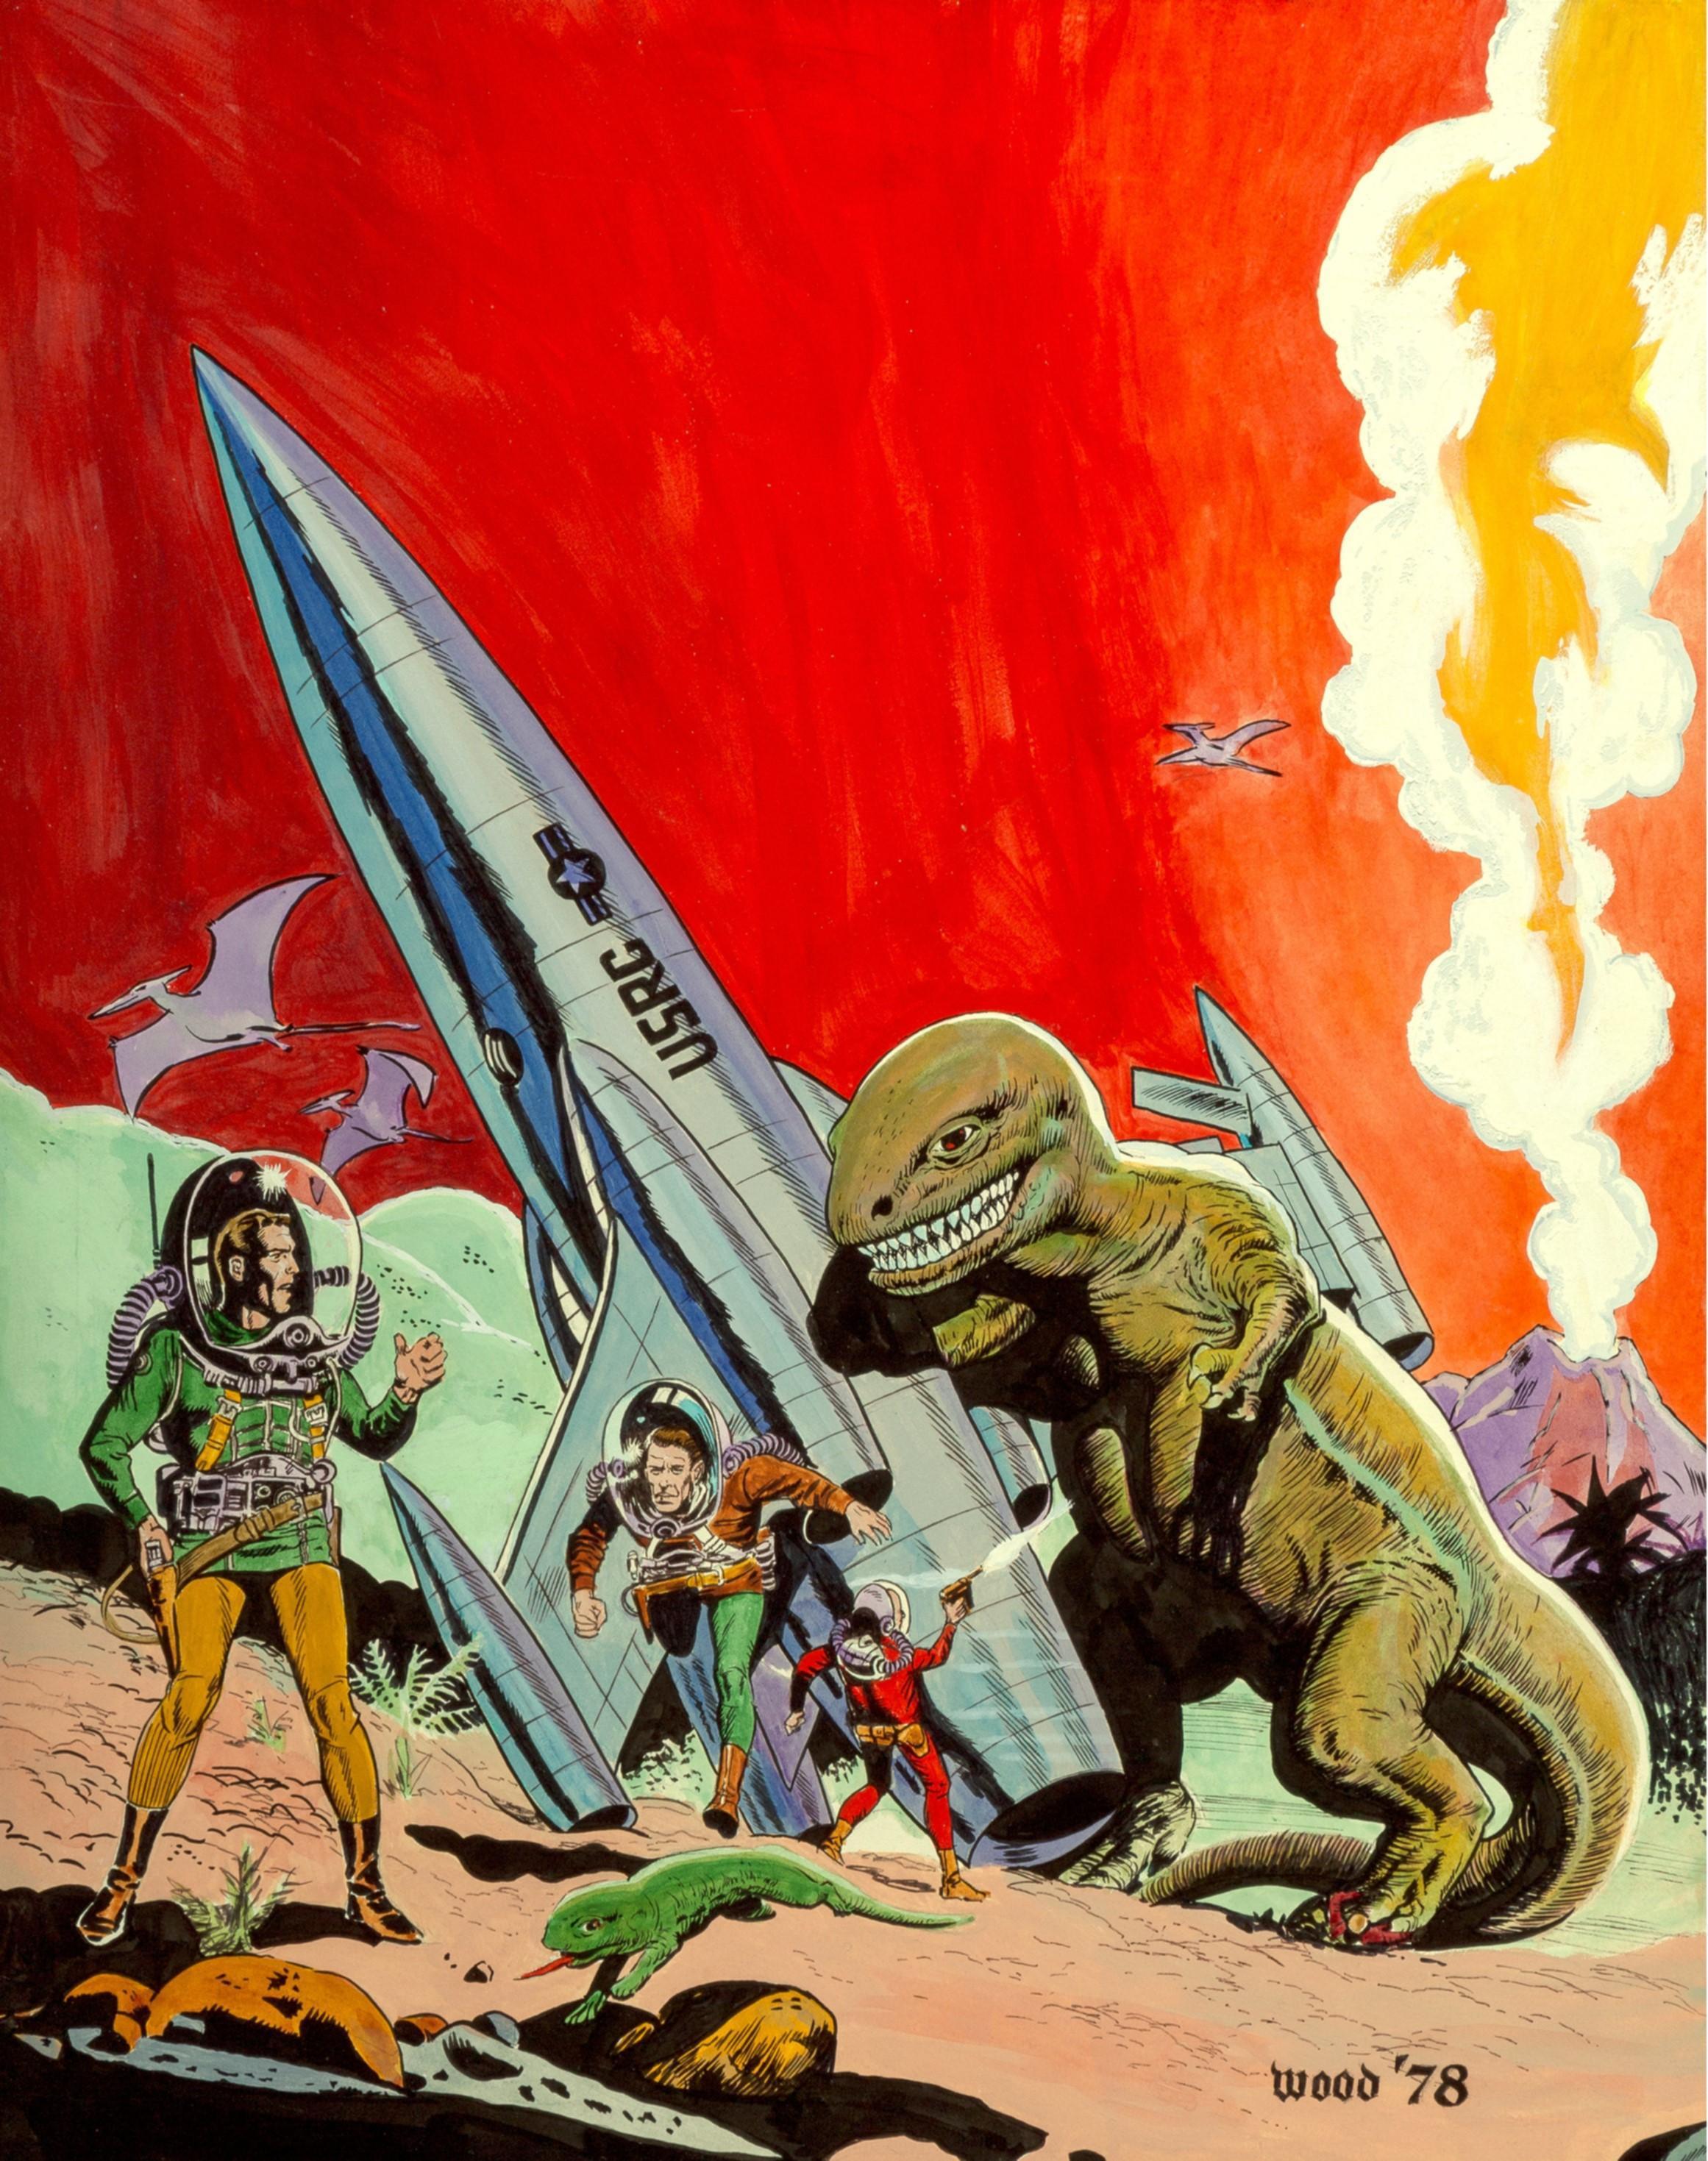 HD wallpaper, Wallace Wally Wood, Bubble Helmet, Rocket, Dinosaurs, Retro Science Fiction, Pulp Magazine, Science Fiction